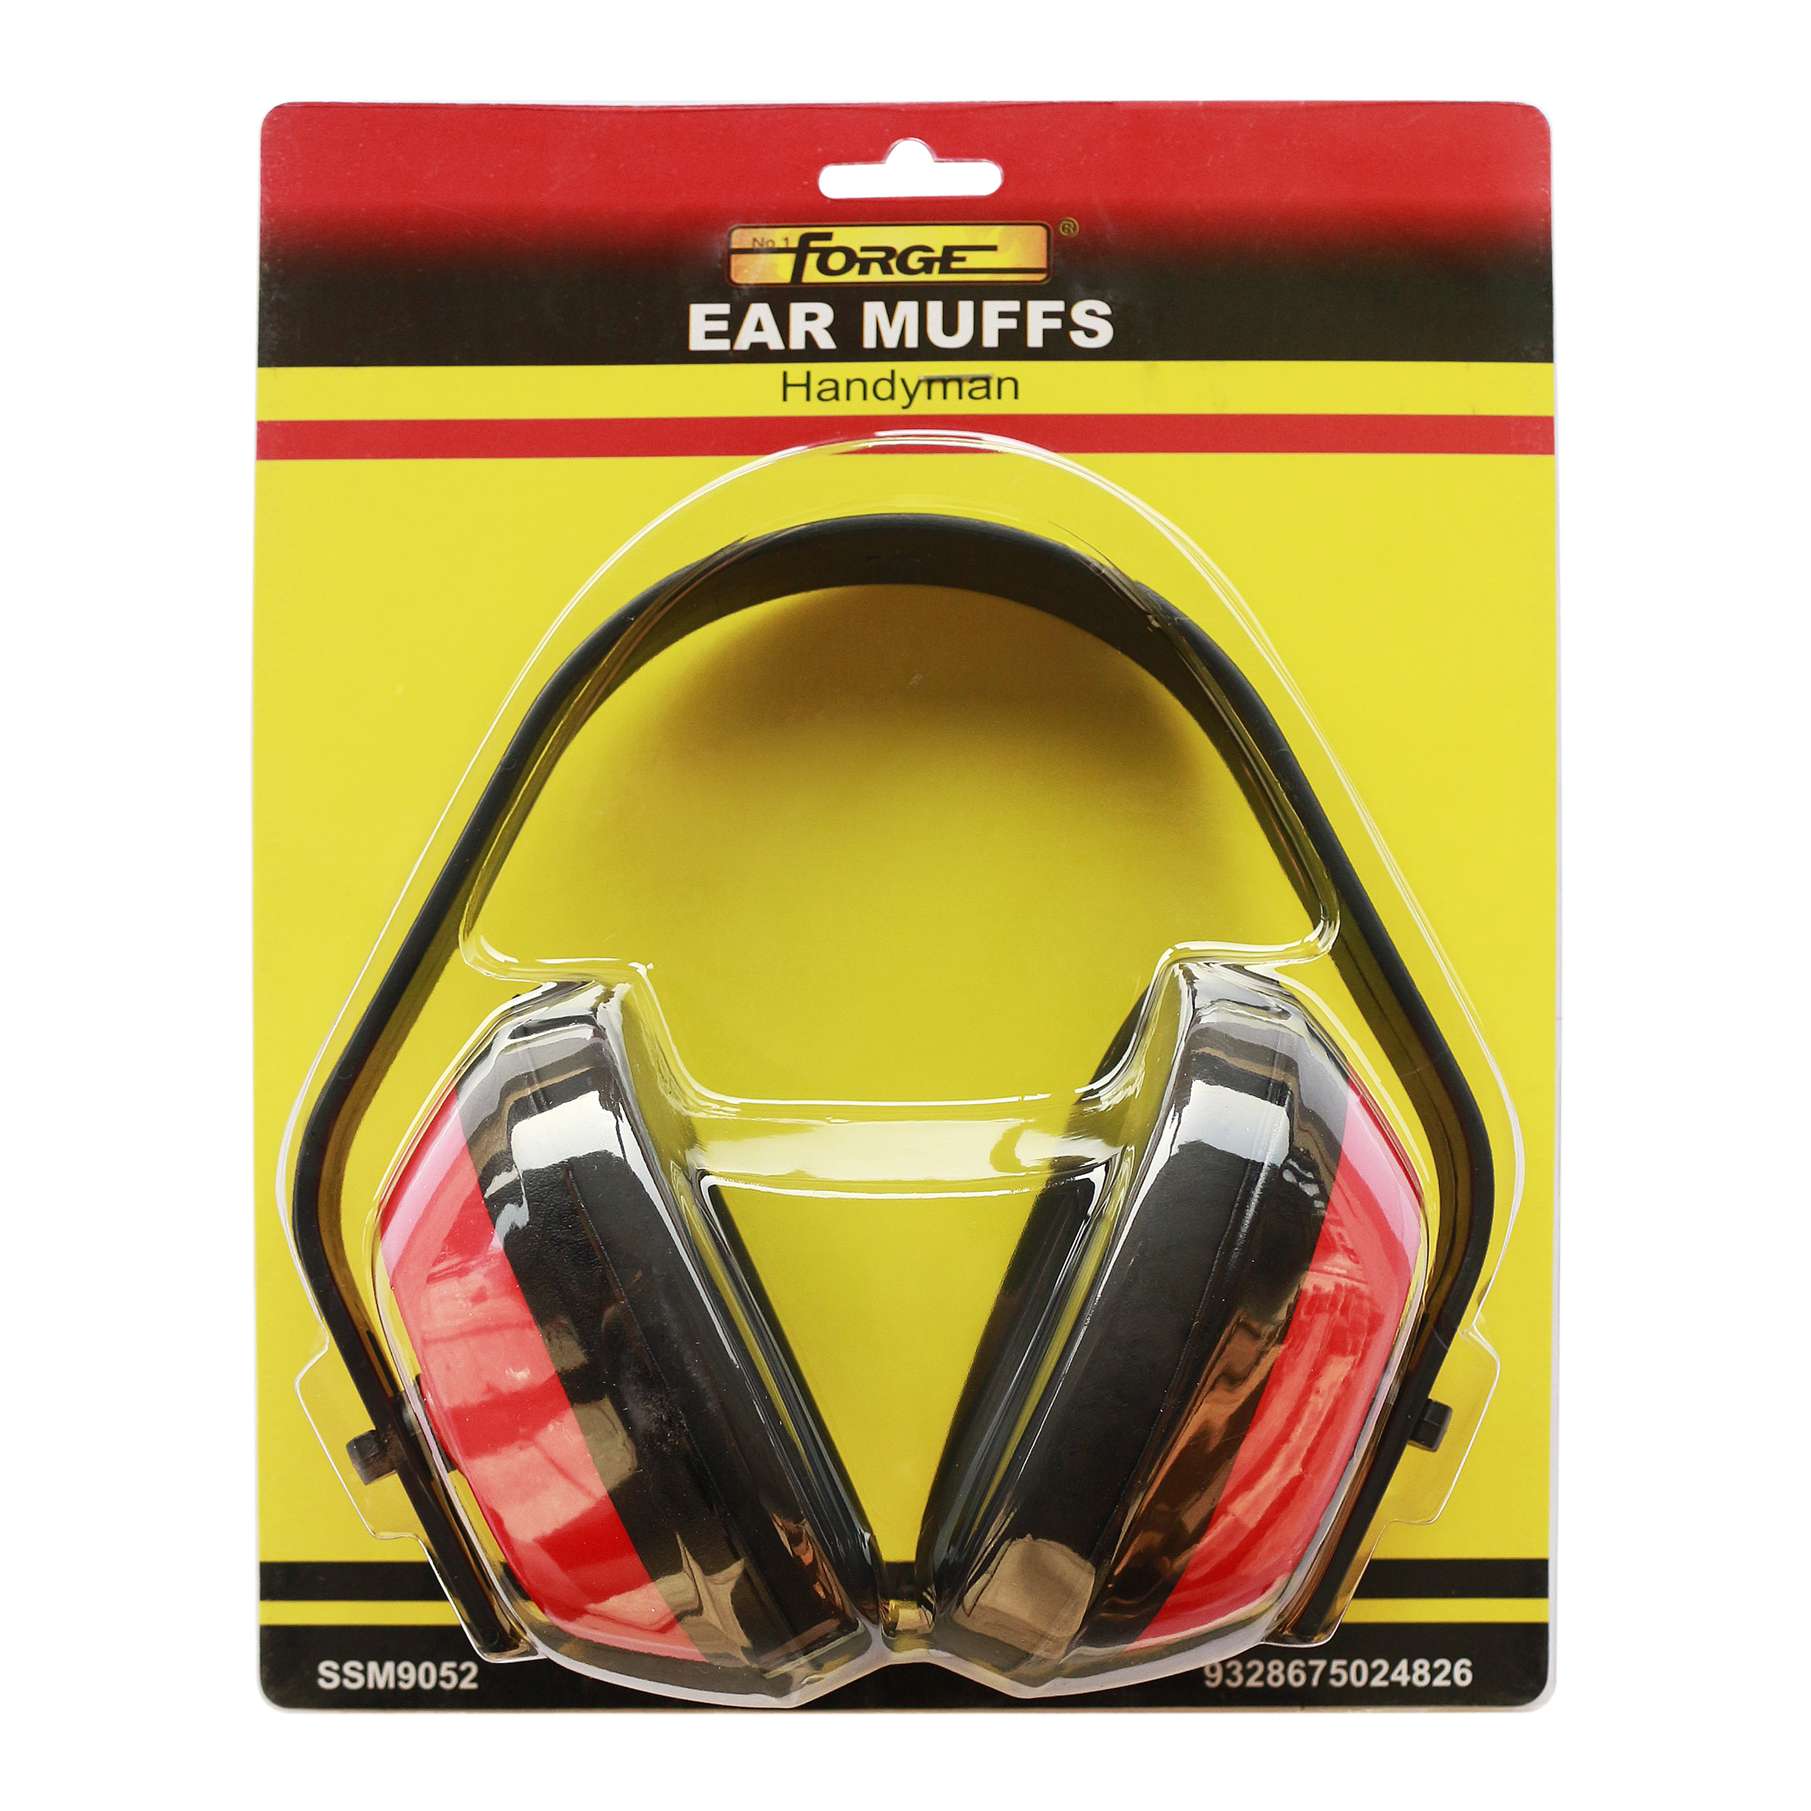 Handyman Ear Muffs - 4